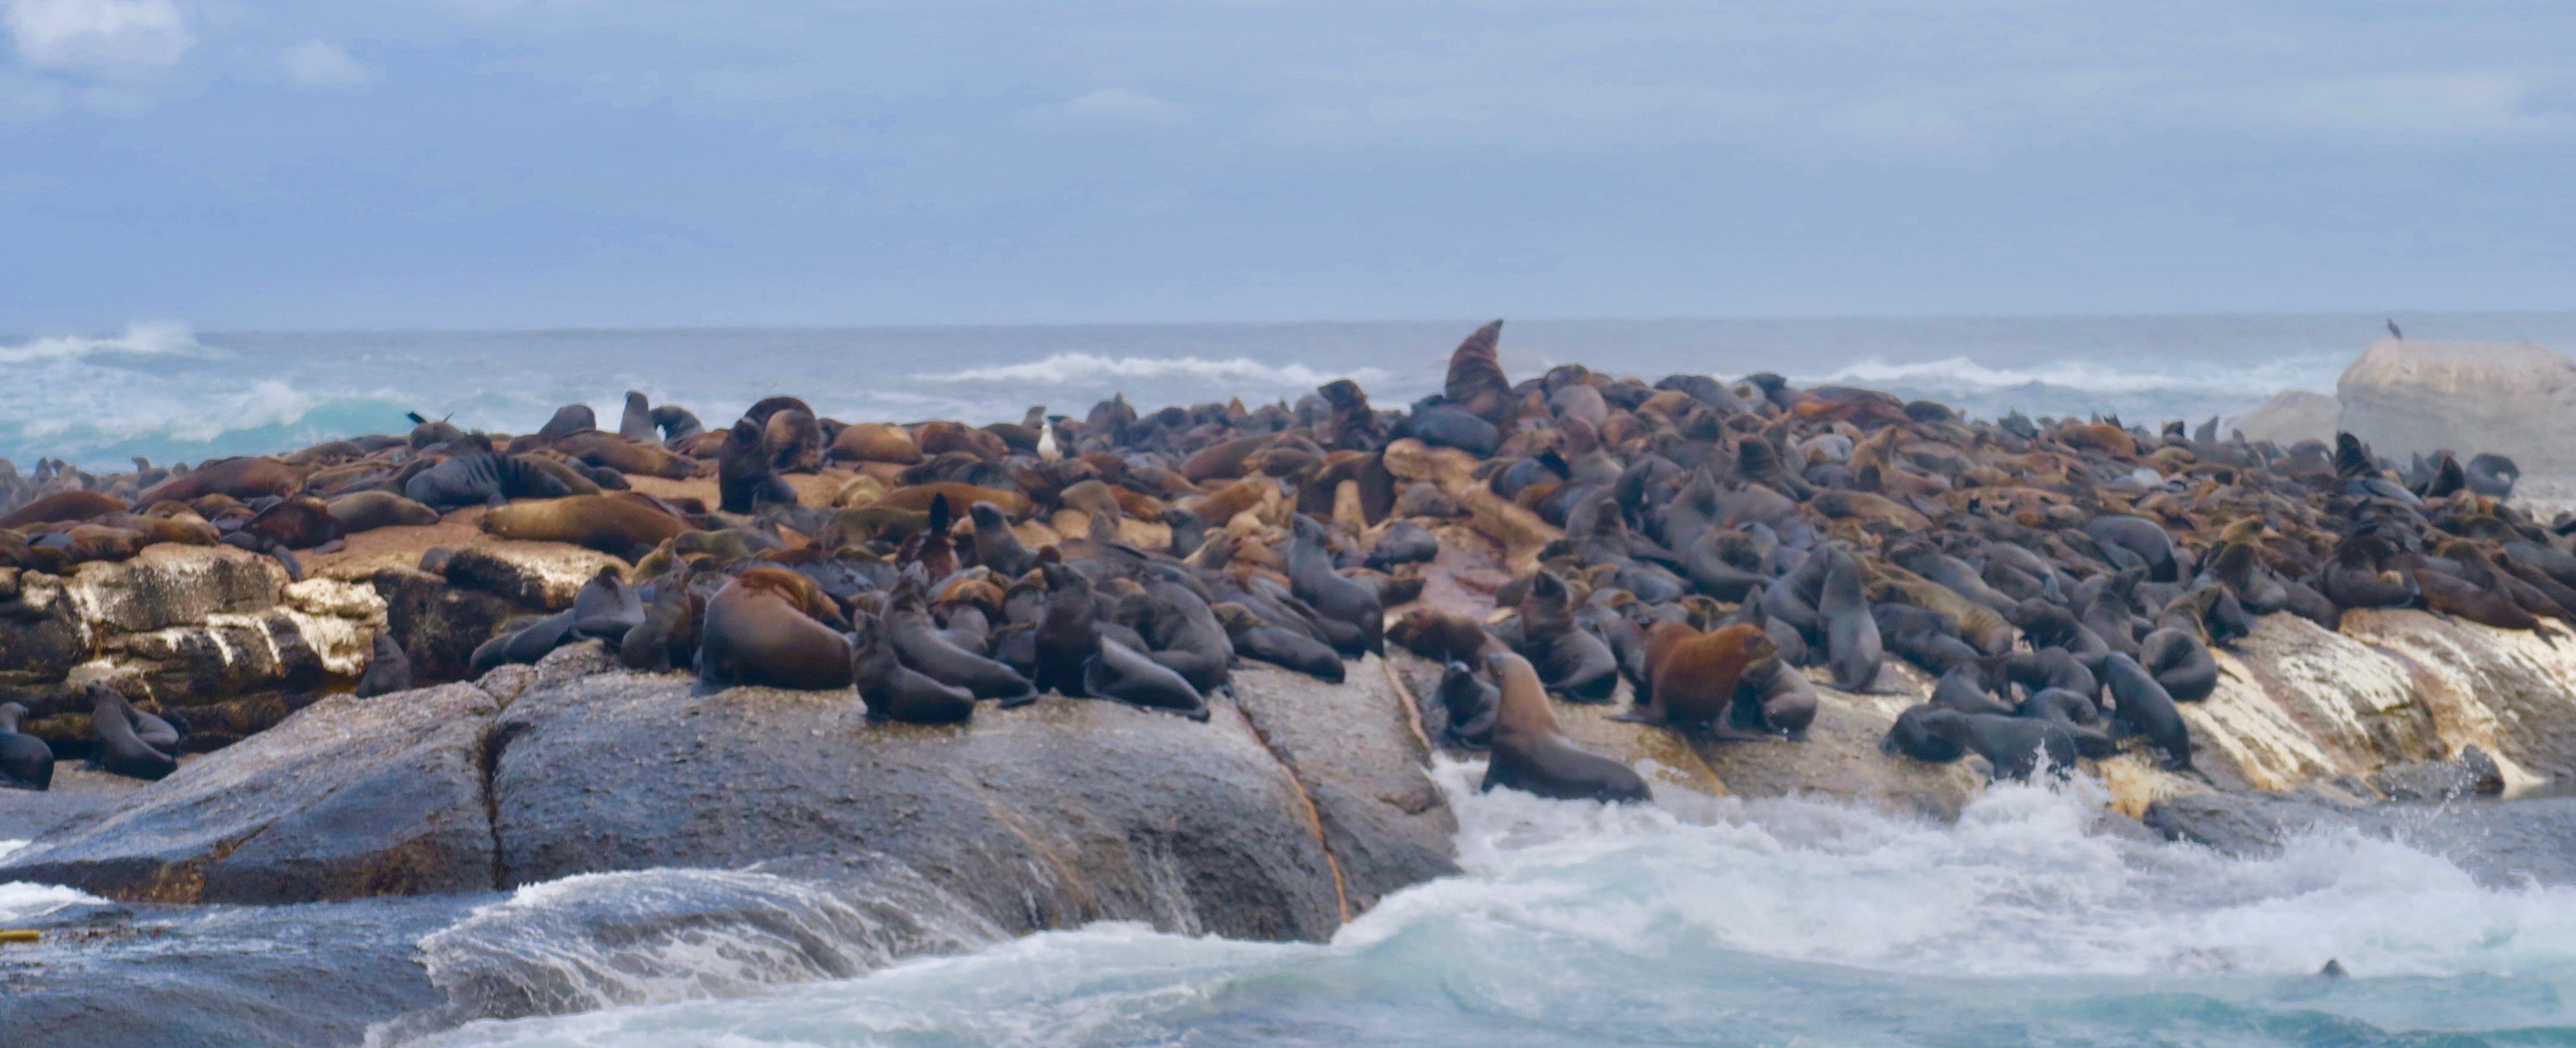 Seal Island, Cape of Good Hope